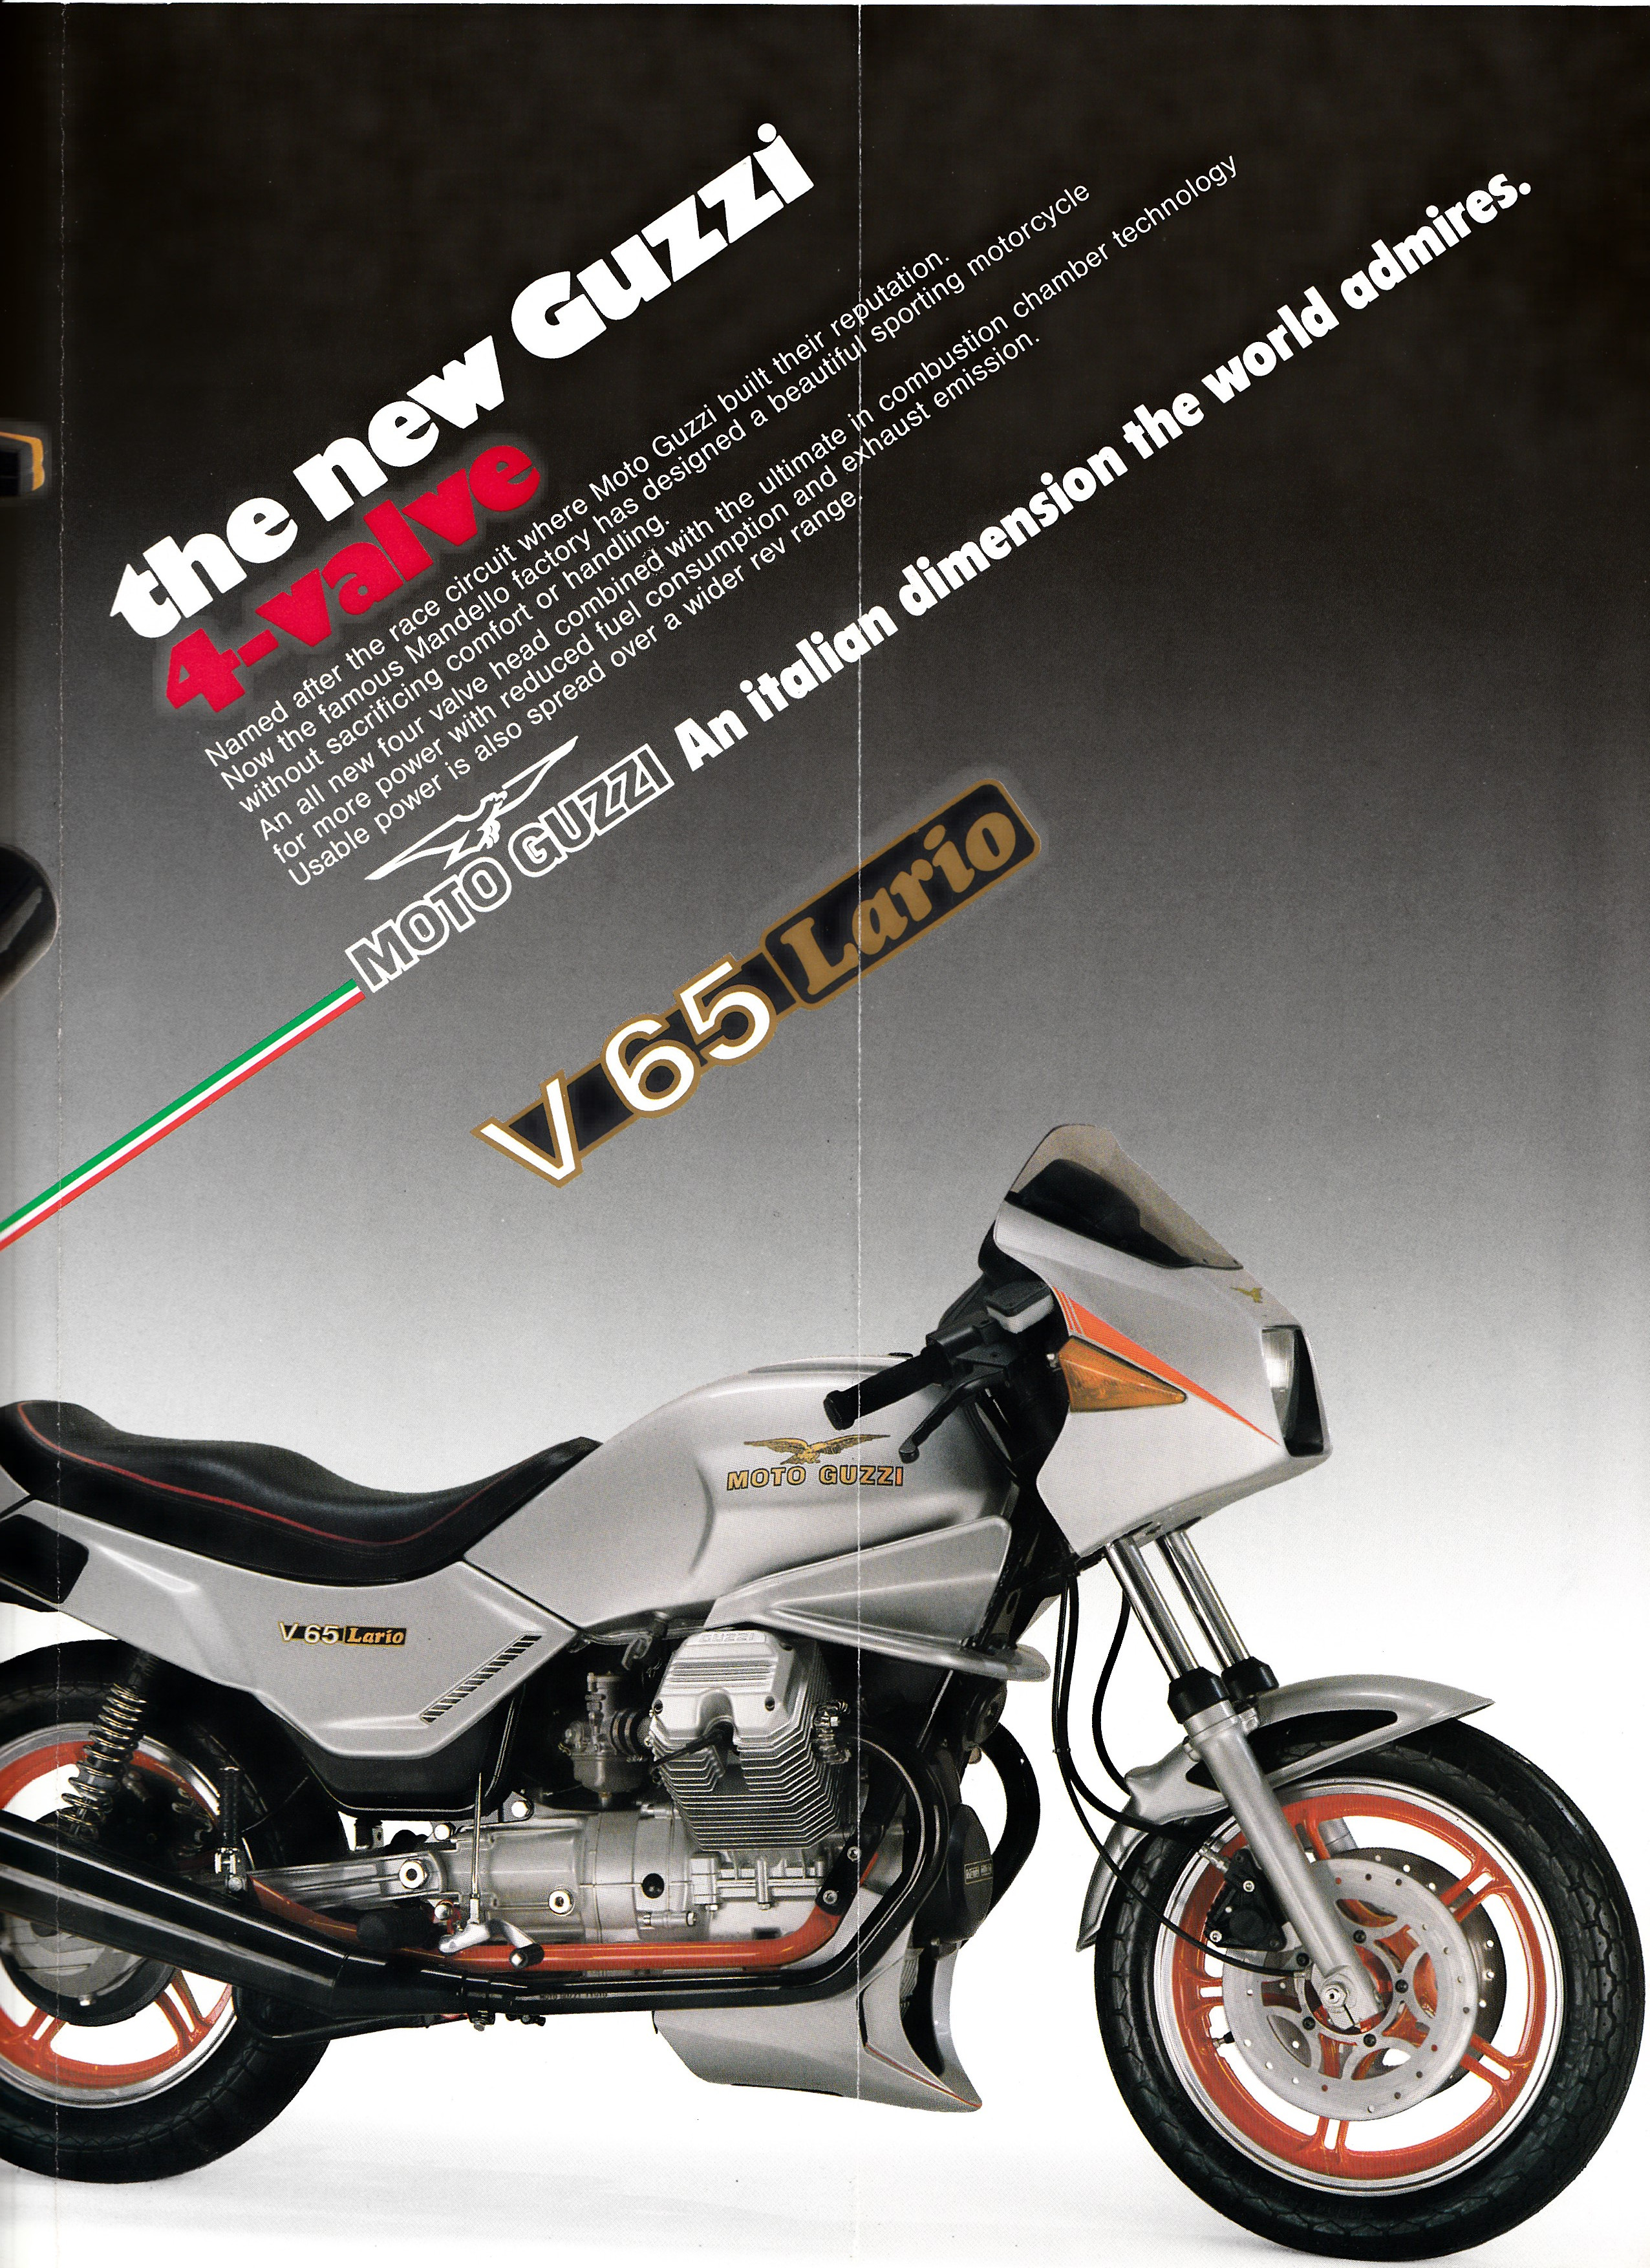 Brochure - Moto Guzzi V65 Lario 4-valve (folded style brochure)